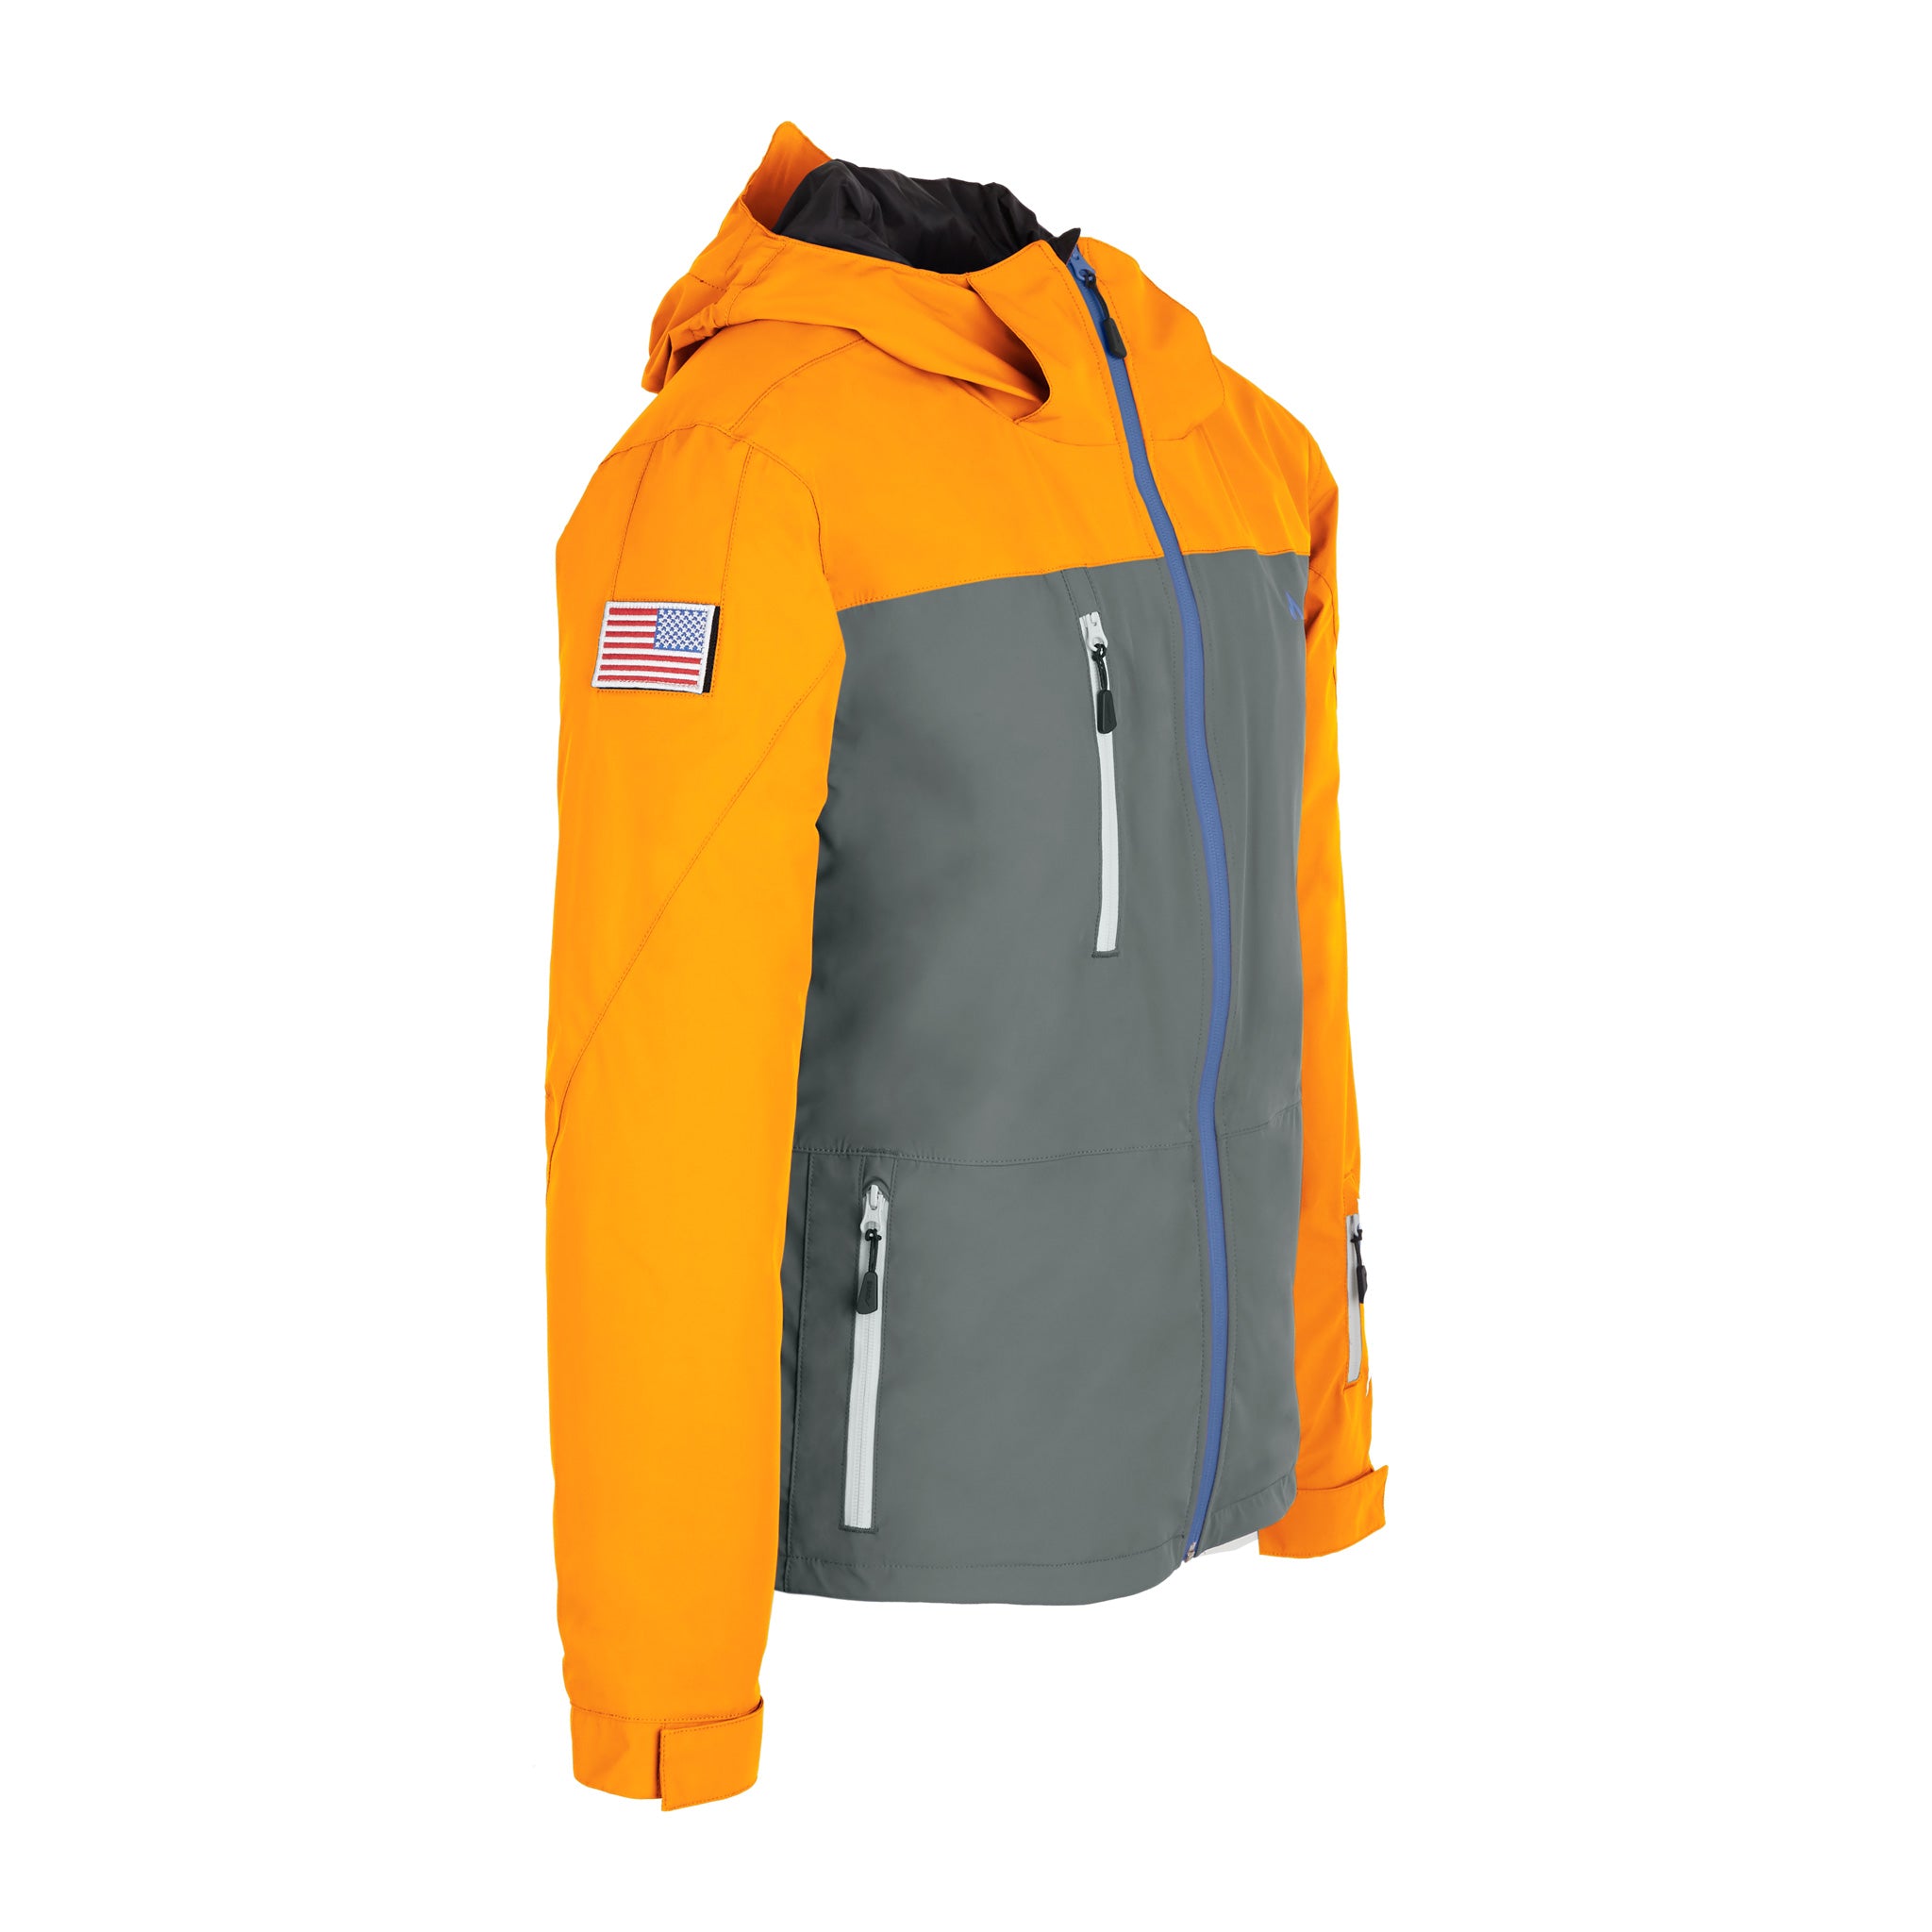 Protego Ski Jacket - Orange - Charcoal - Side